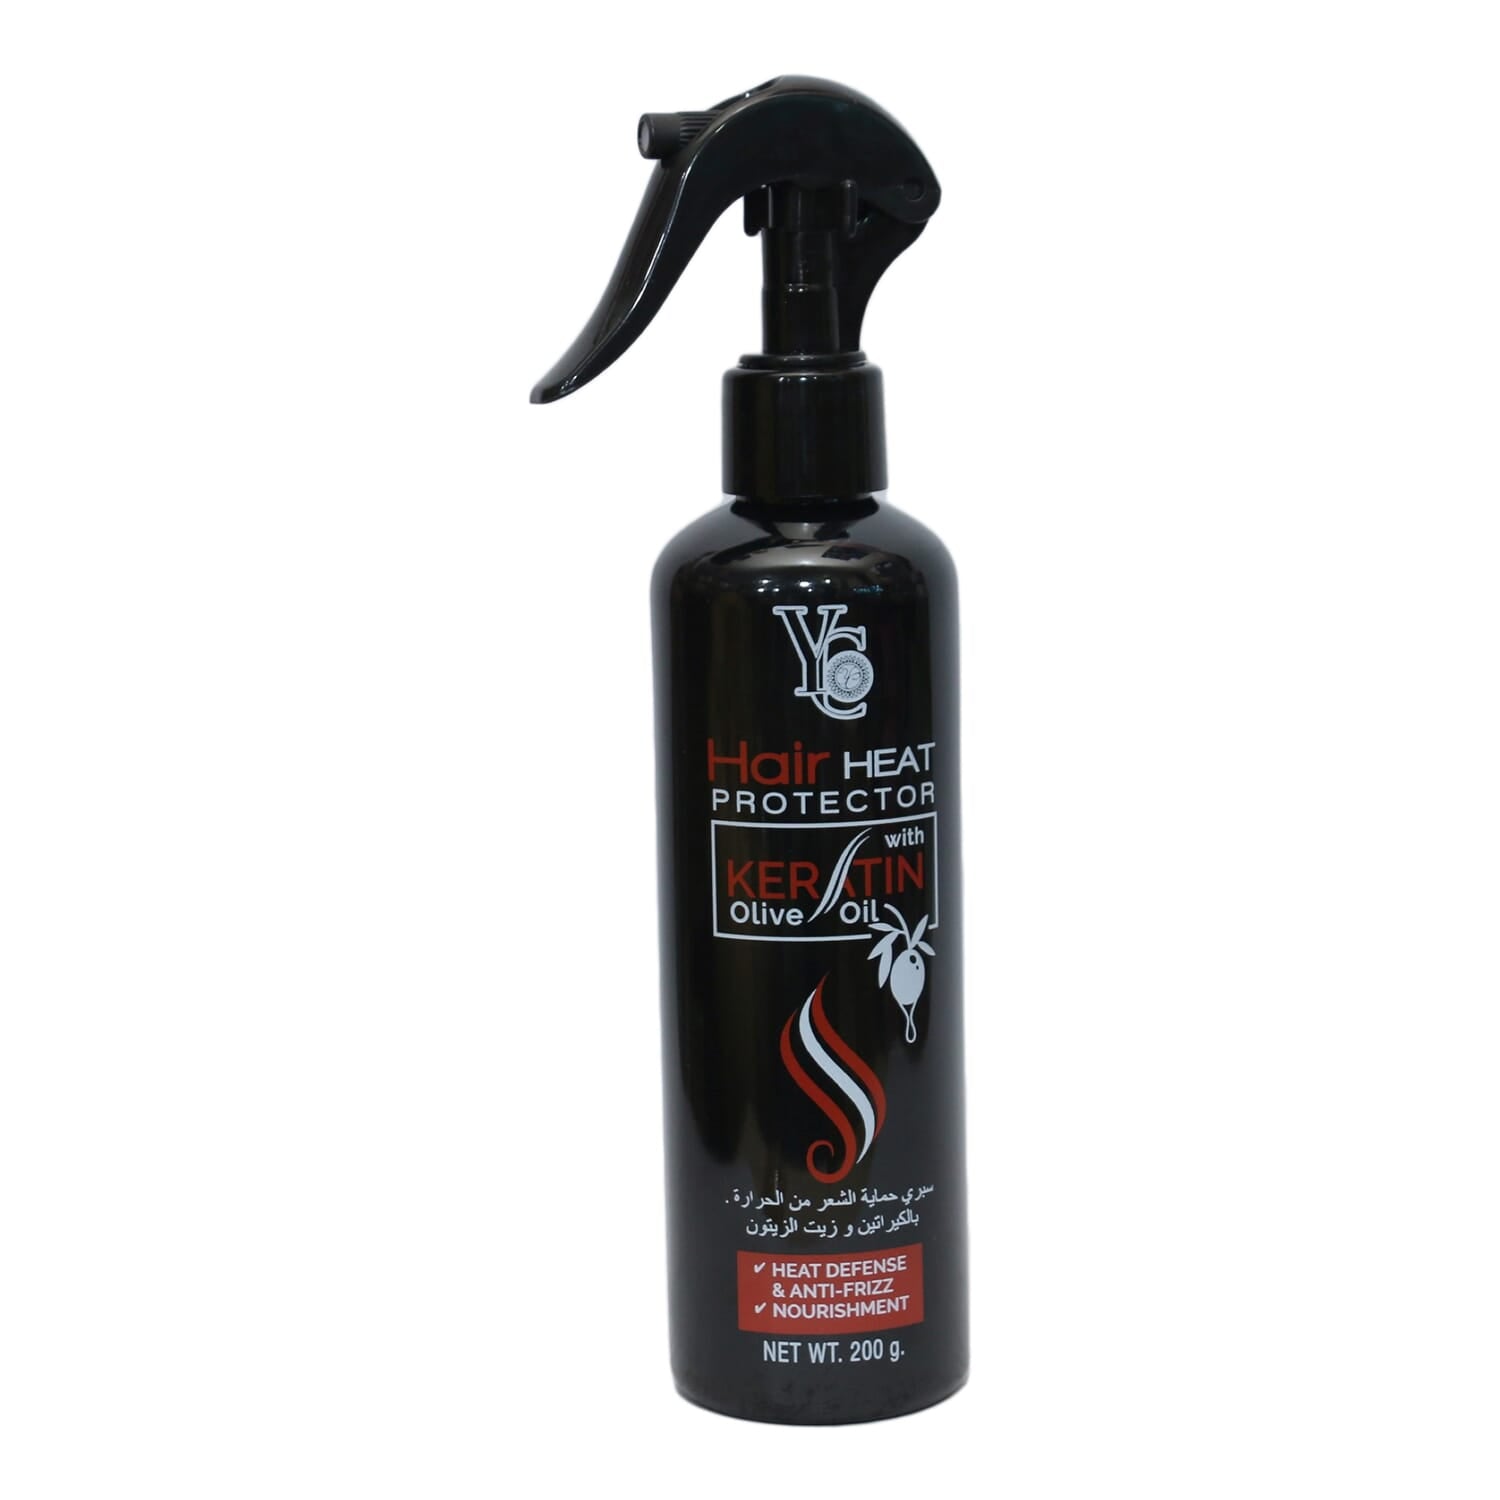 YC Hair Heat Protector with Keratin Olive Oil (200 g) YC